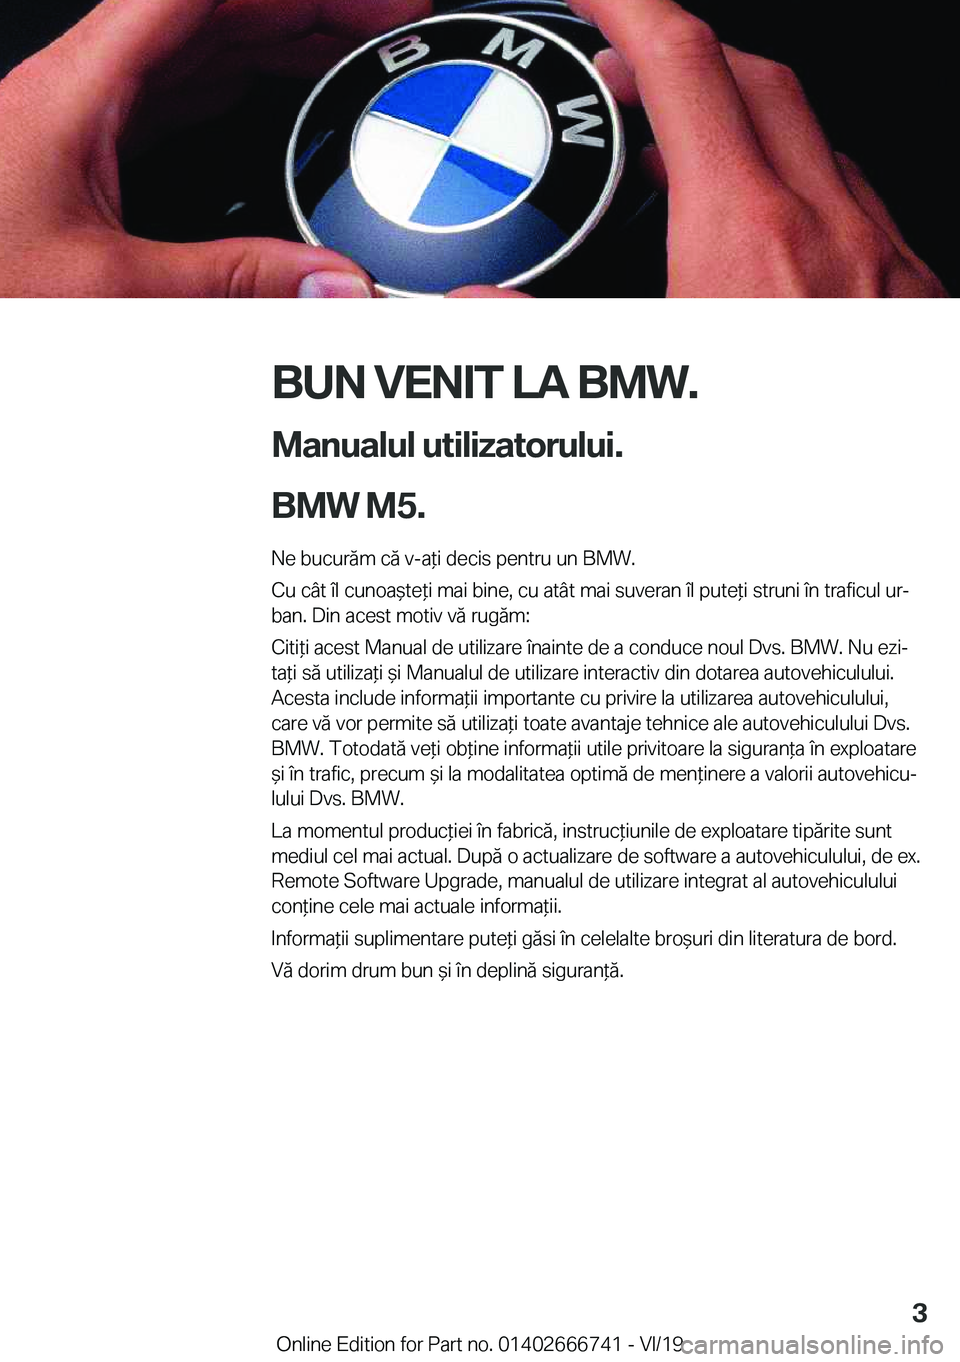 BMW M5 2020  Ghiduri De Utilizare (in Romanian) �B�U�N��V�E�N�I�T��L�A��B�M�W�.�M�a�n�u�a�l�u�l��u�t�i�l�i�z�a�t�o�r�u�l�u�i�.
�B�M�W��M�5�. �N�e��b�u�c�u�r�